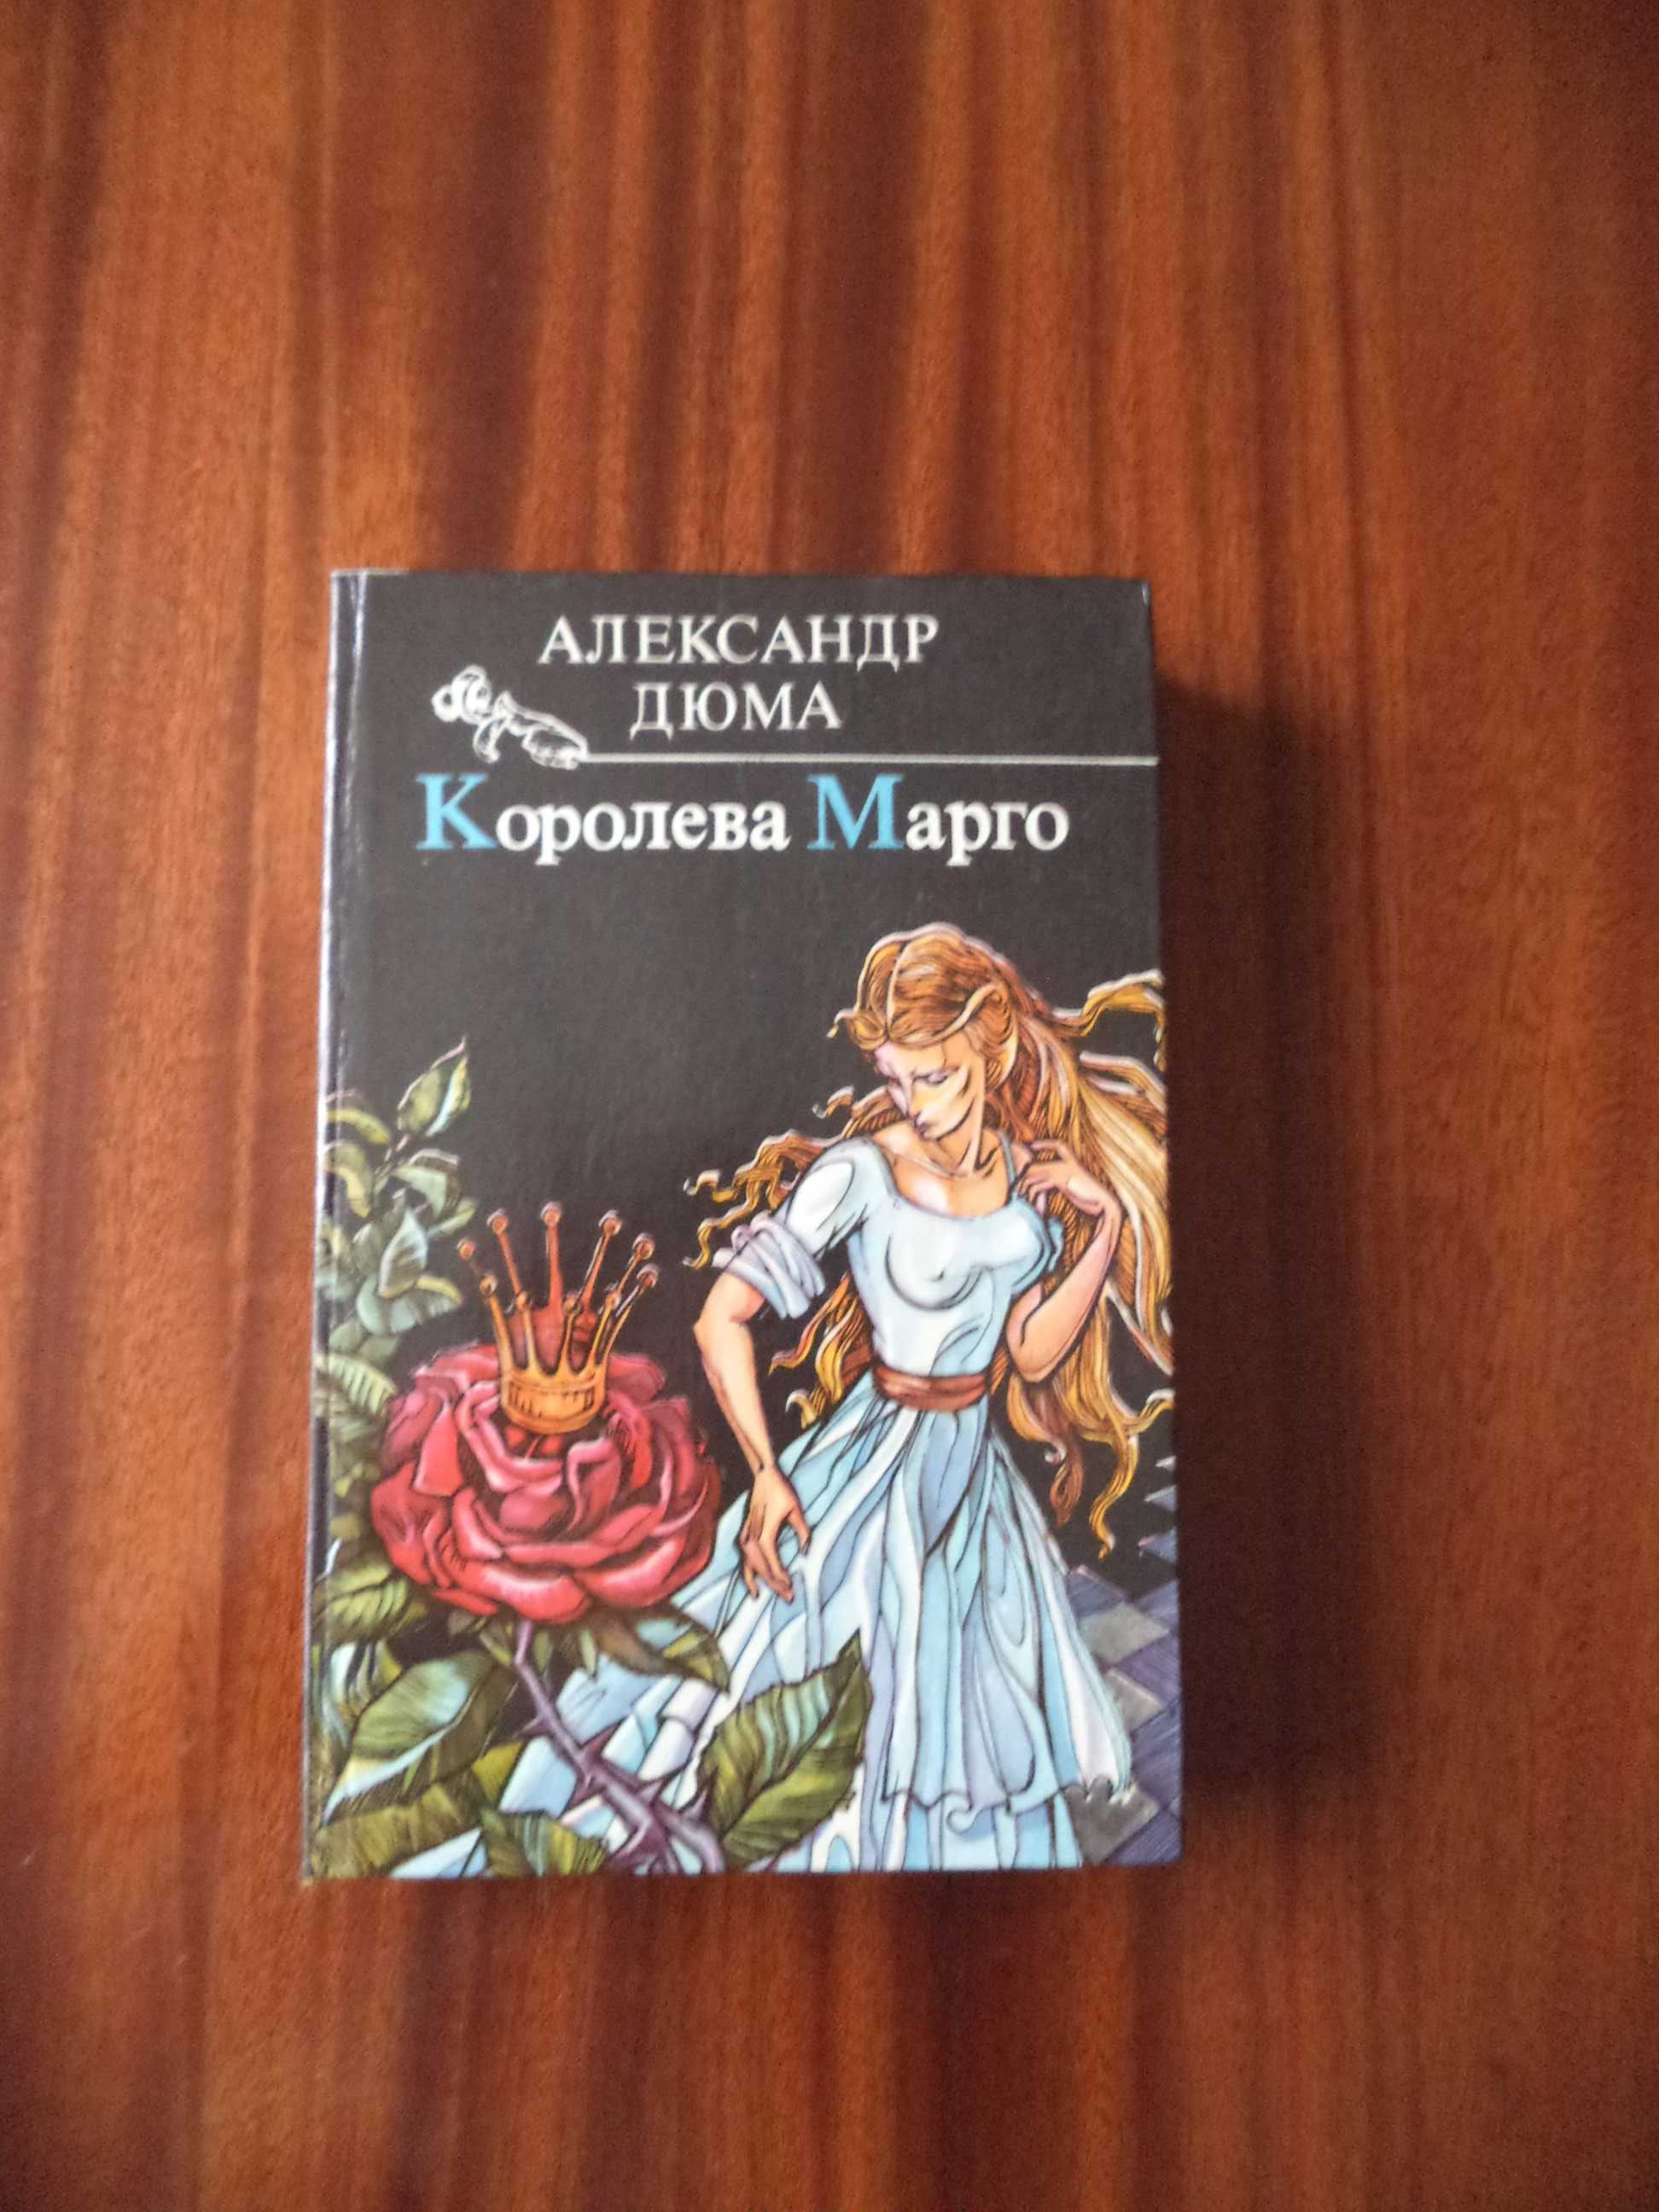 Роман Александра Дюма «Королева Марго», 1992г. вып.